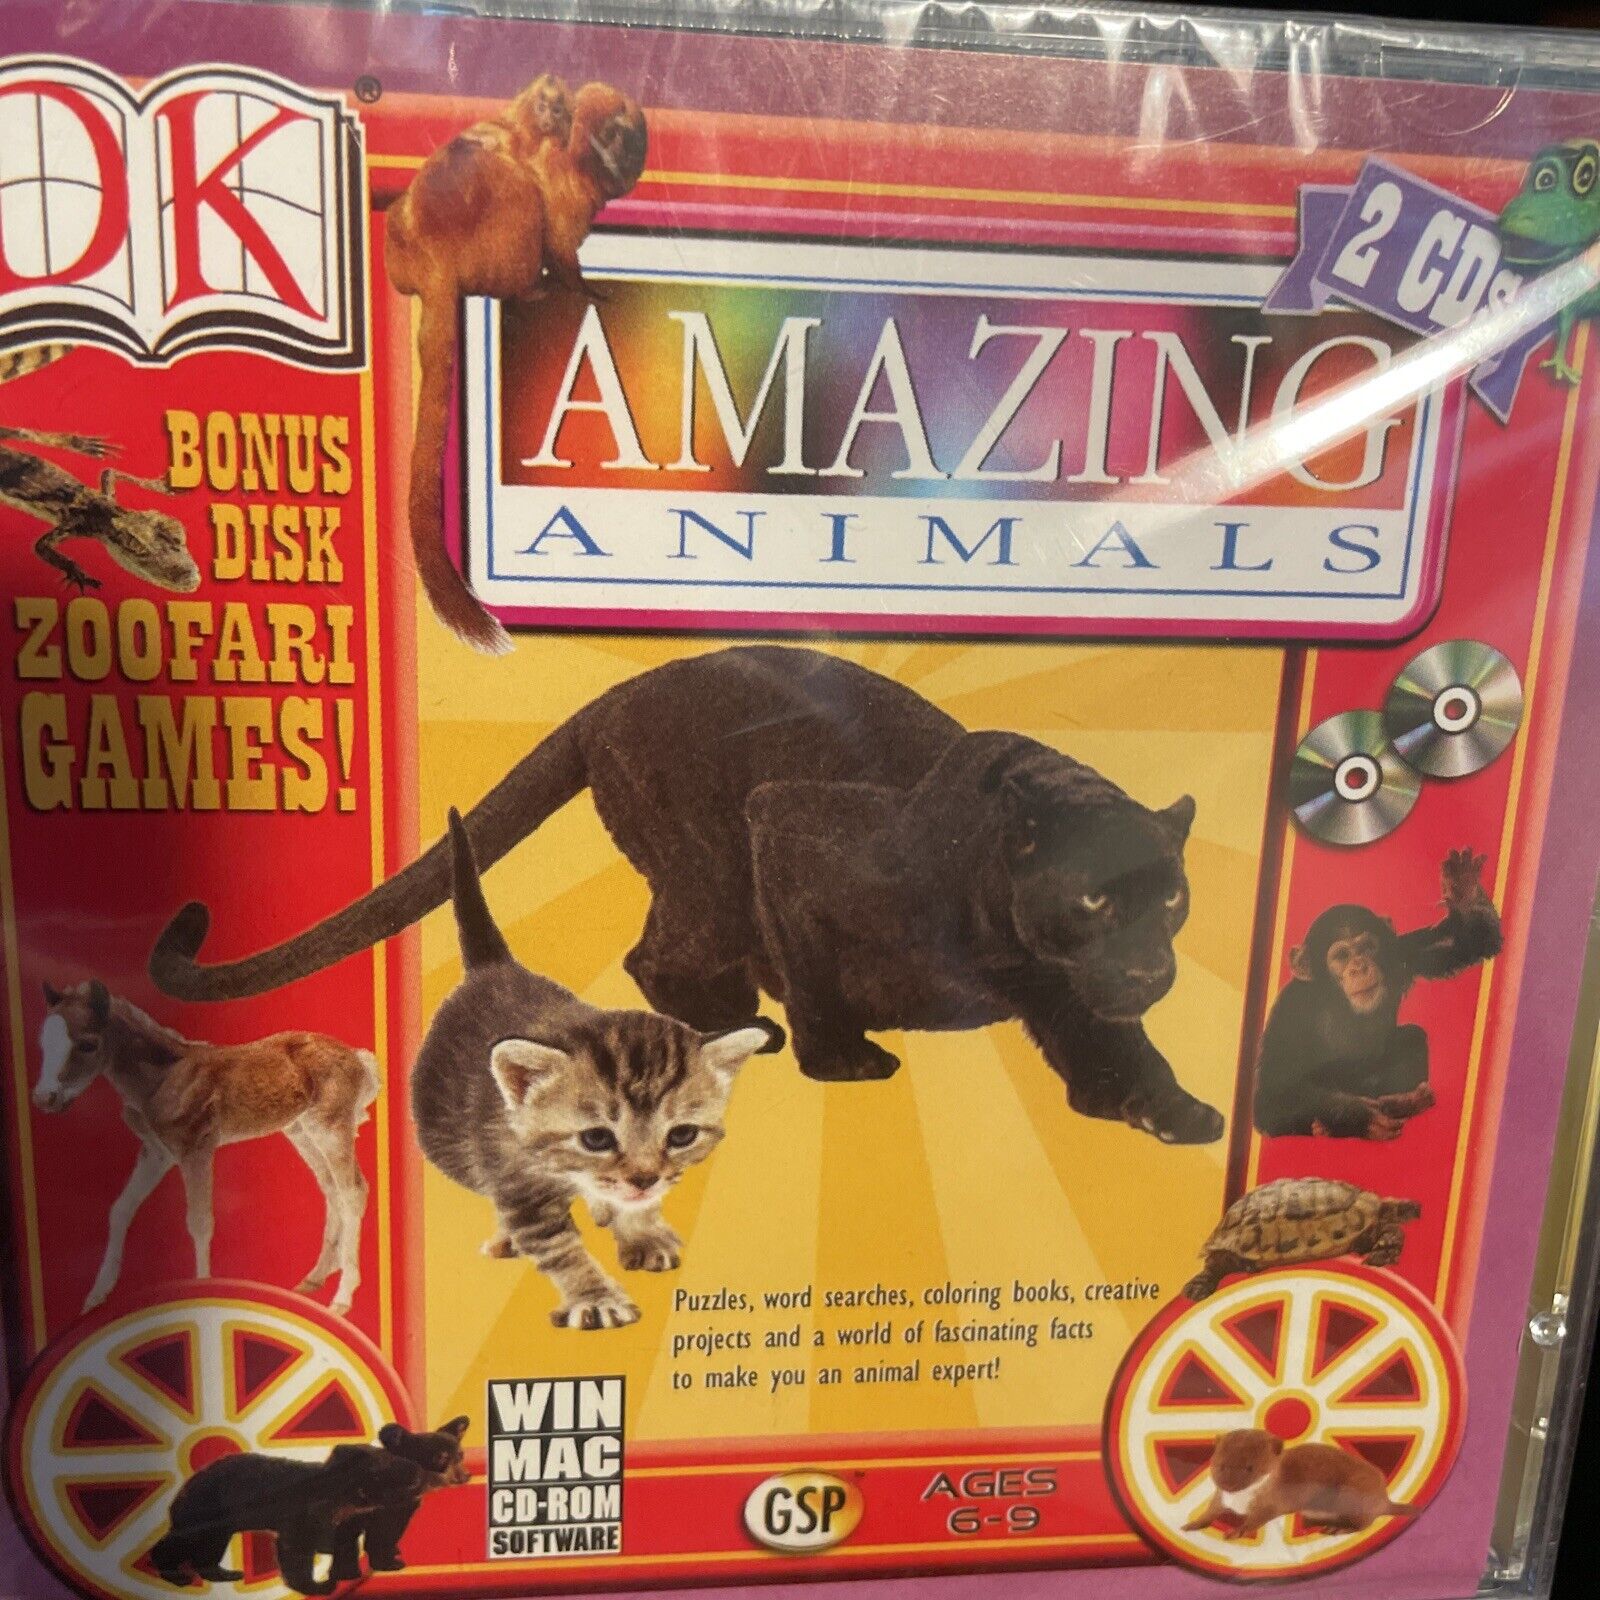 DK Amazing Animals [Win & Mac CD-ROM] 9780439800266 - Bonus Game - Zoofari